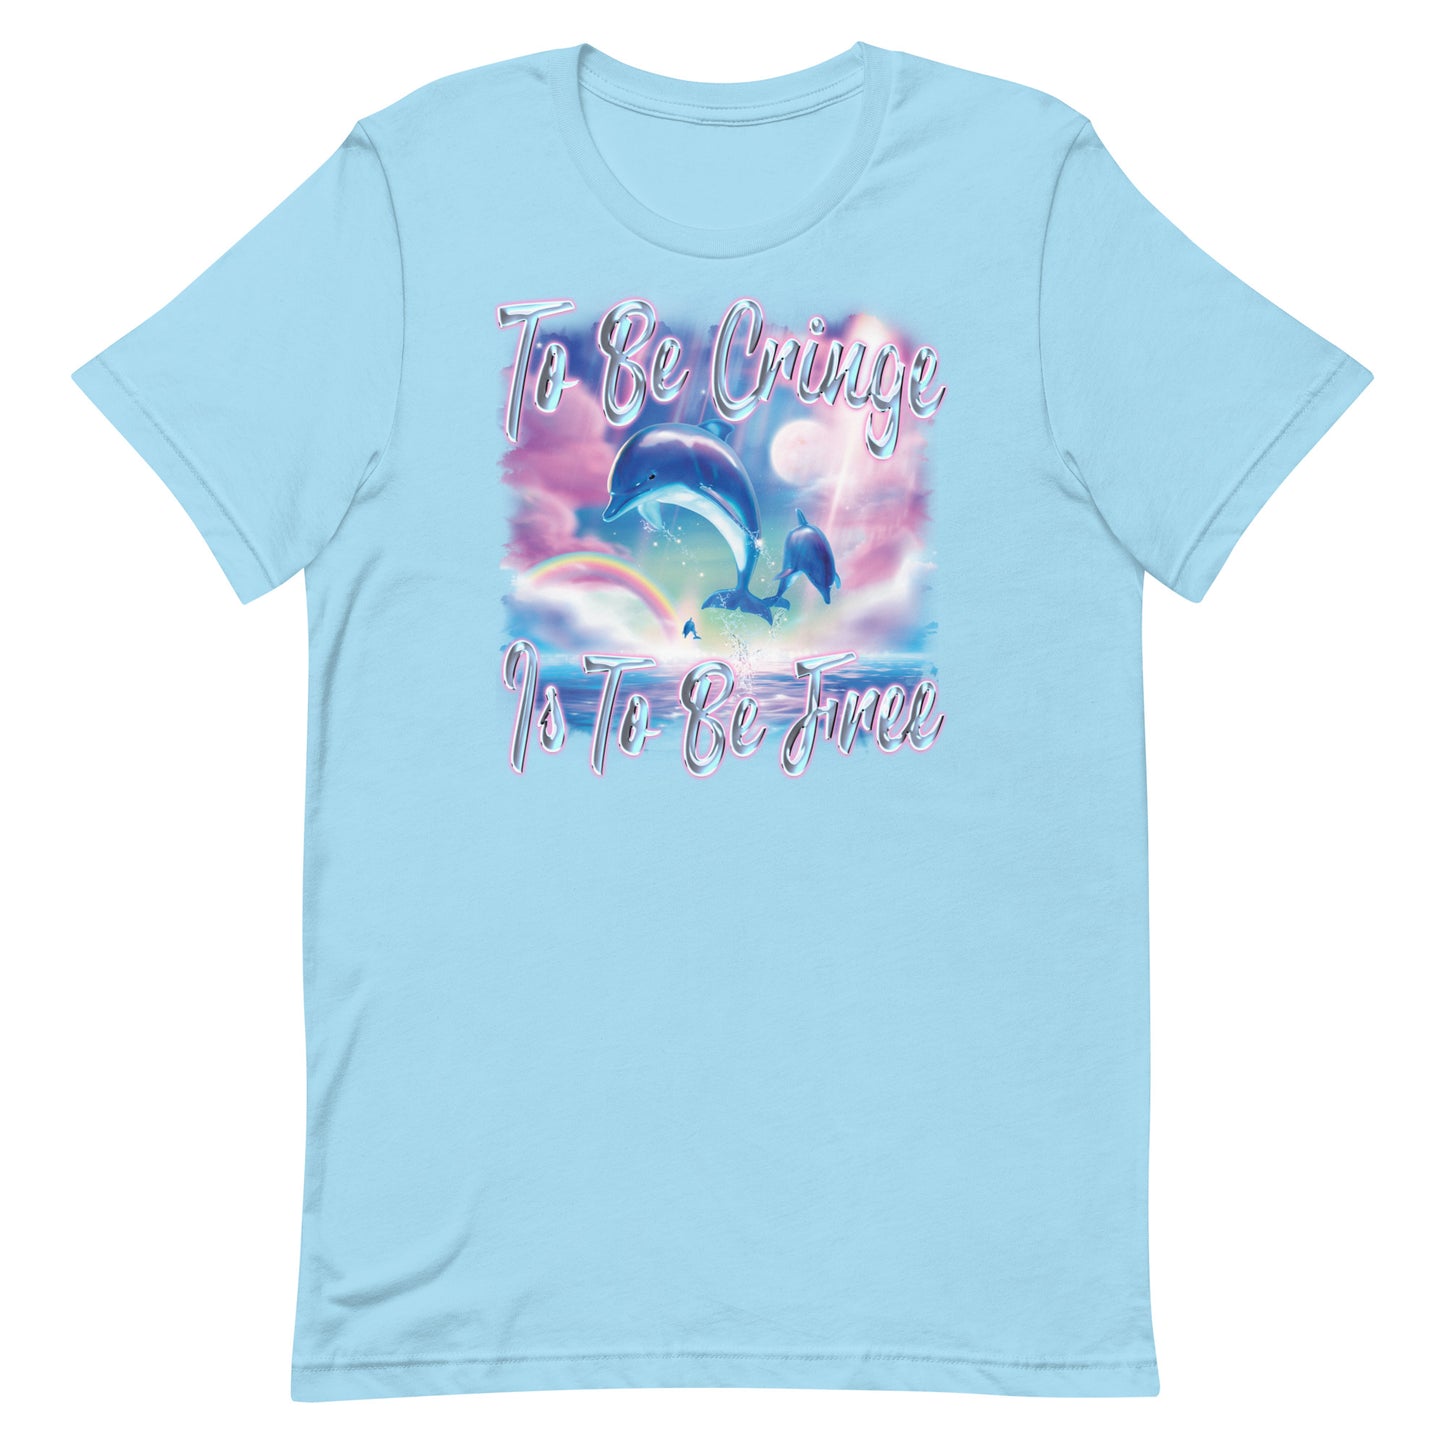 To Be Be Cringe (Dolphin) Unisex t-shirt